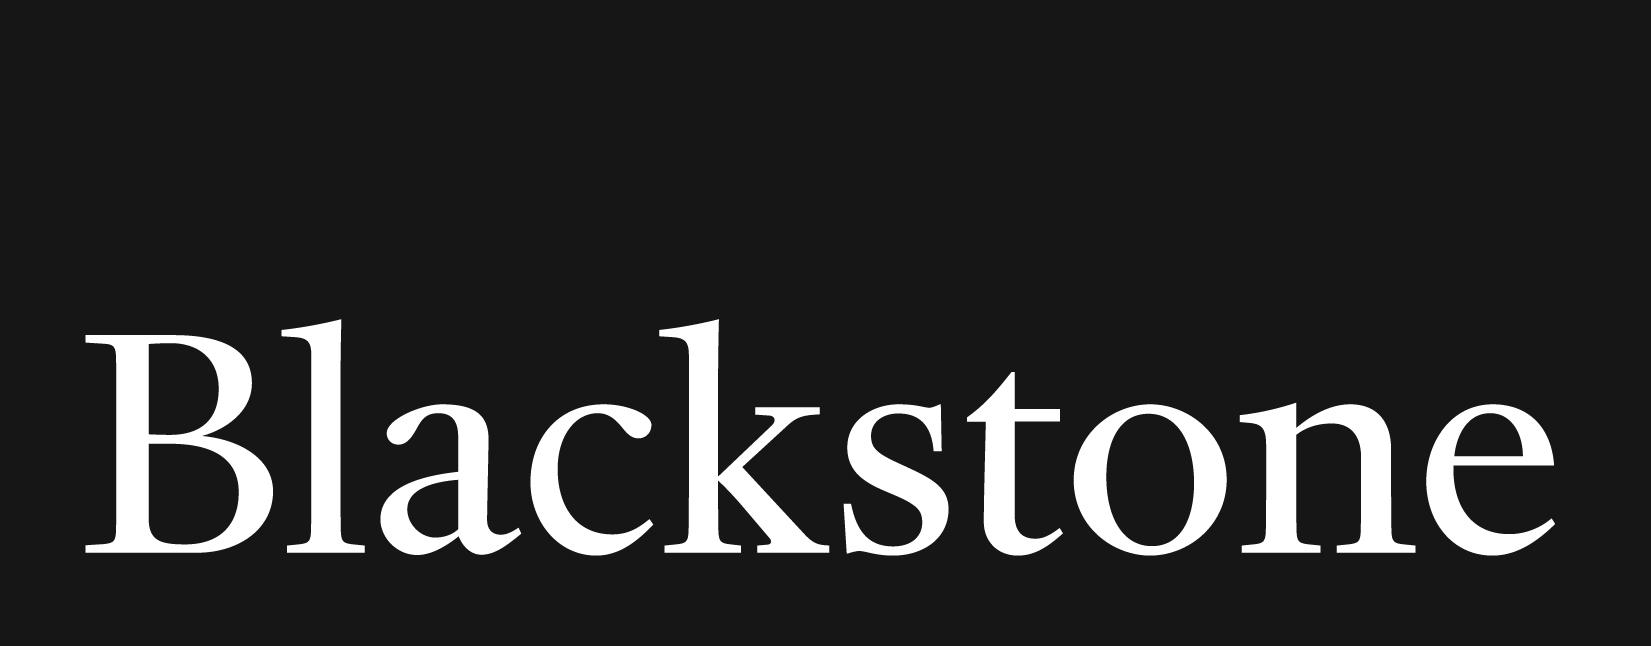 Blackstone Logo photo - 1